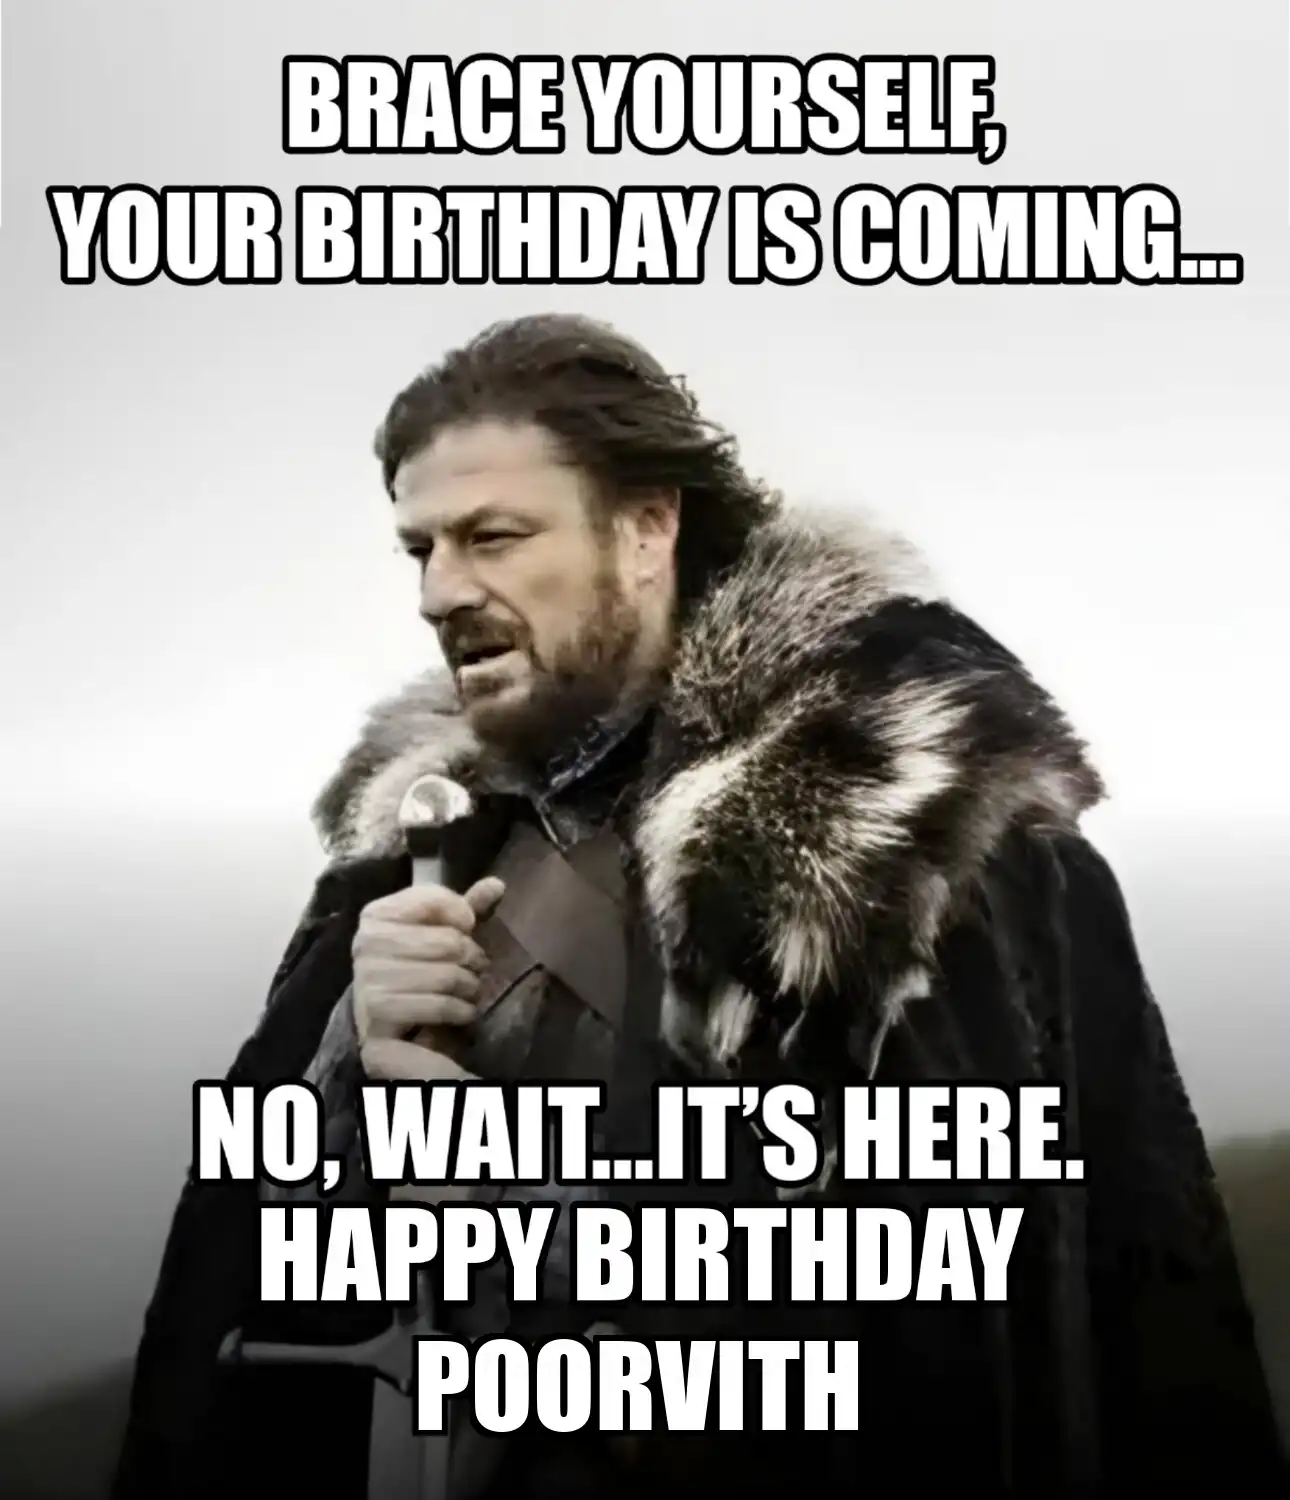 Happy Birthday Poorvith Brace Yourself Your Birthday Is Coming Meme